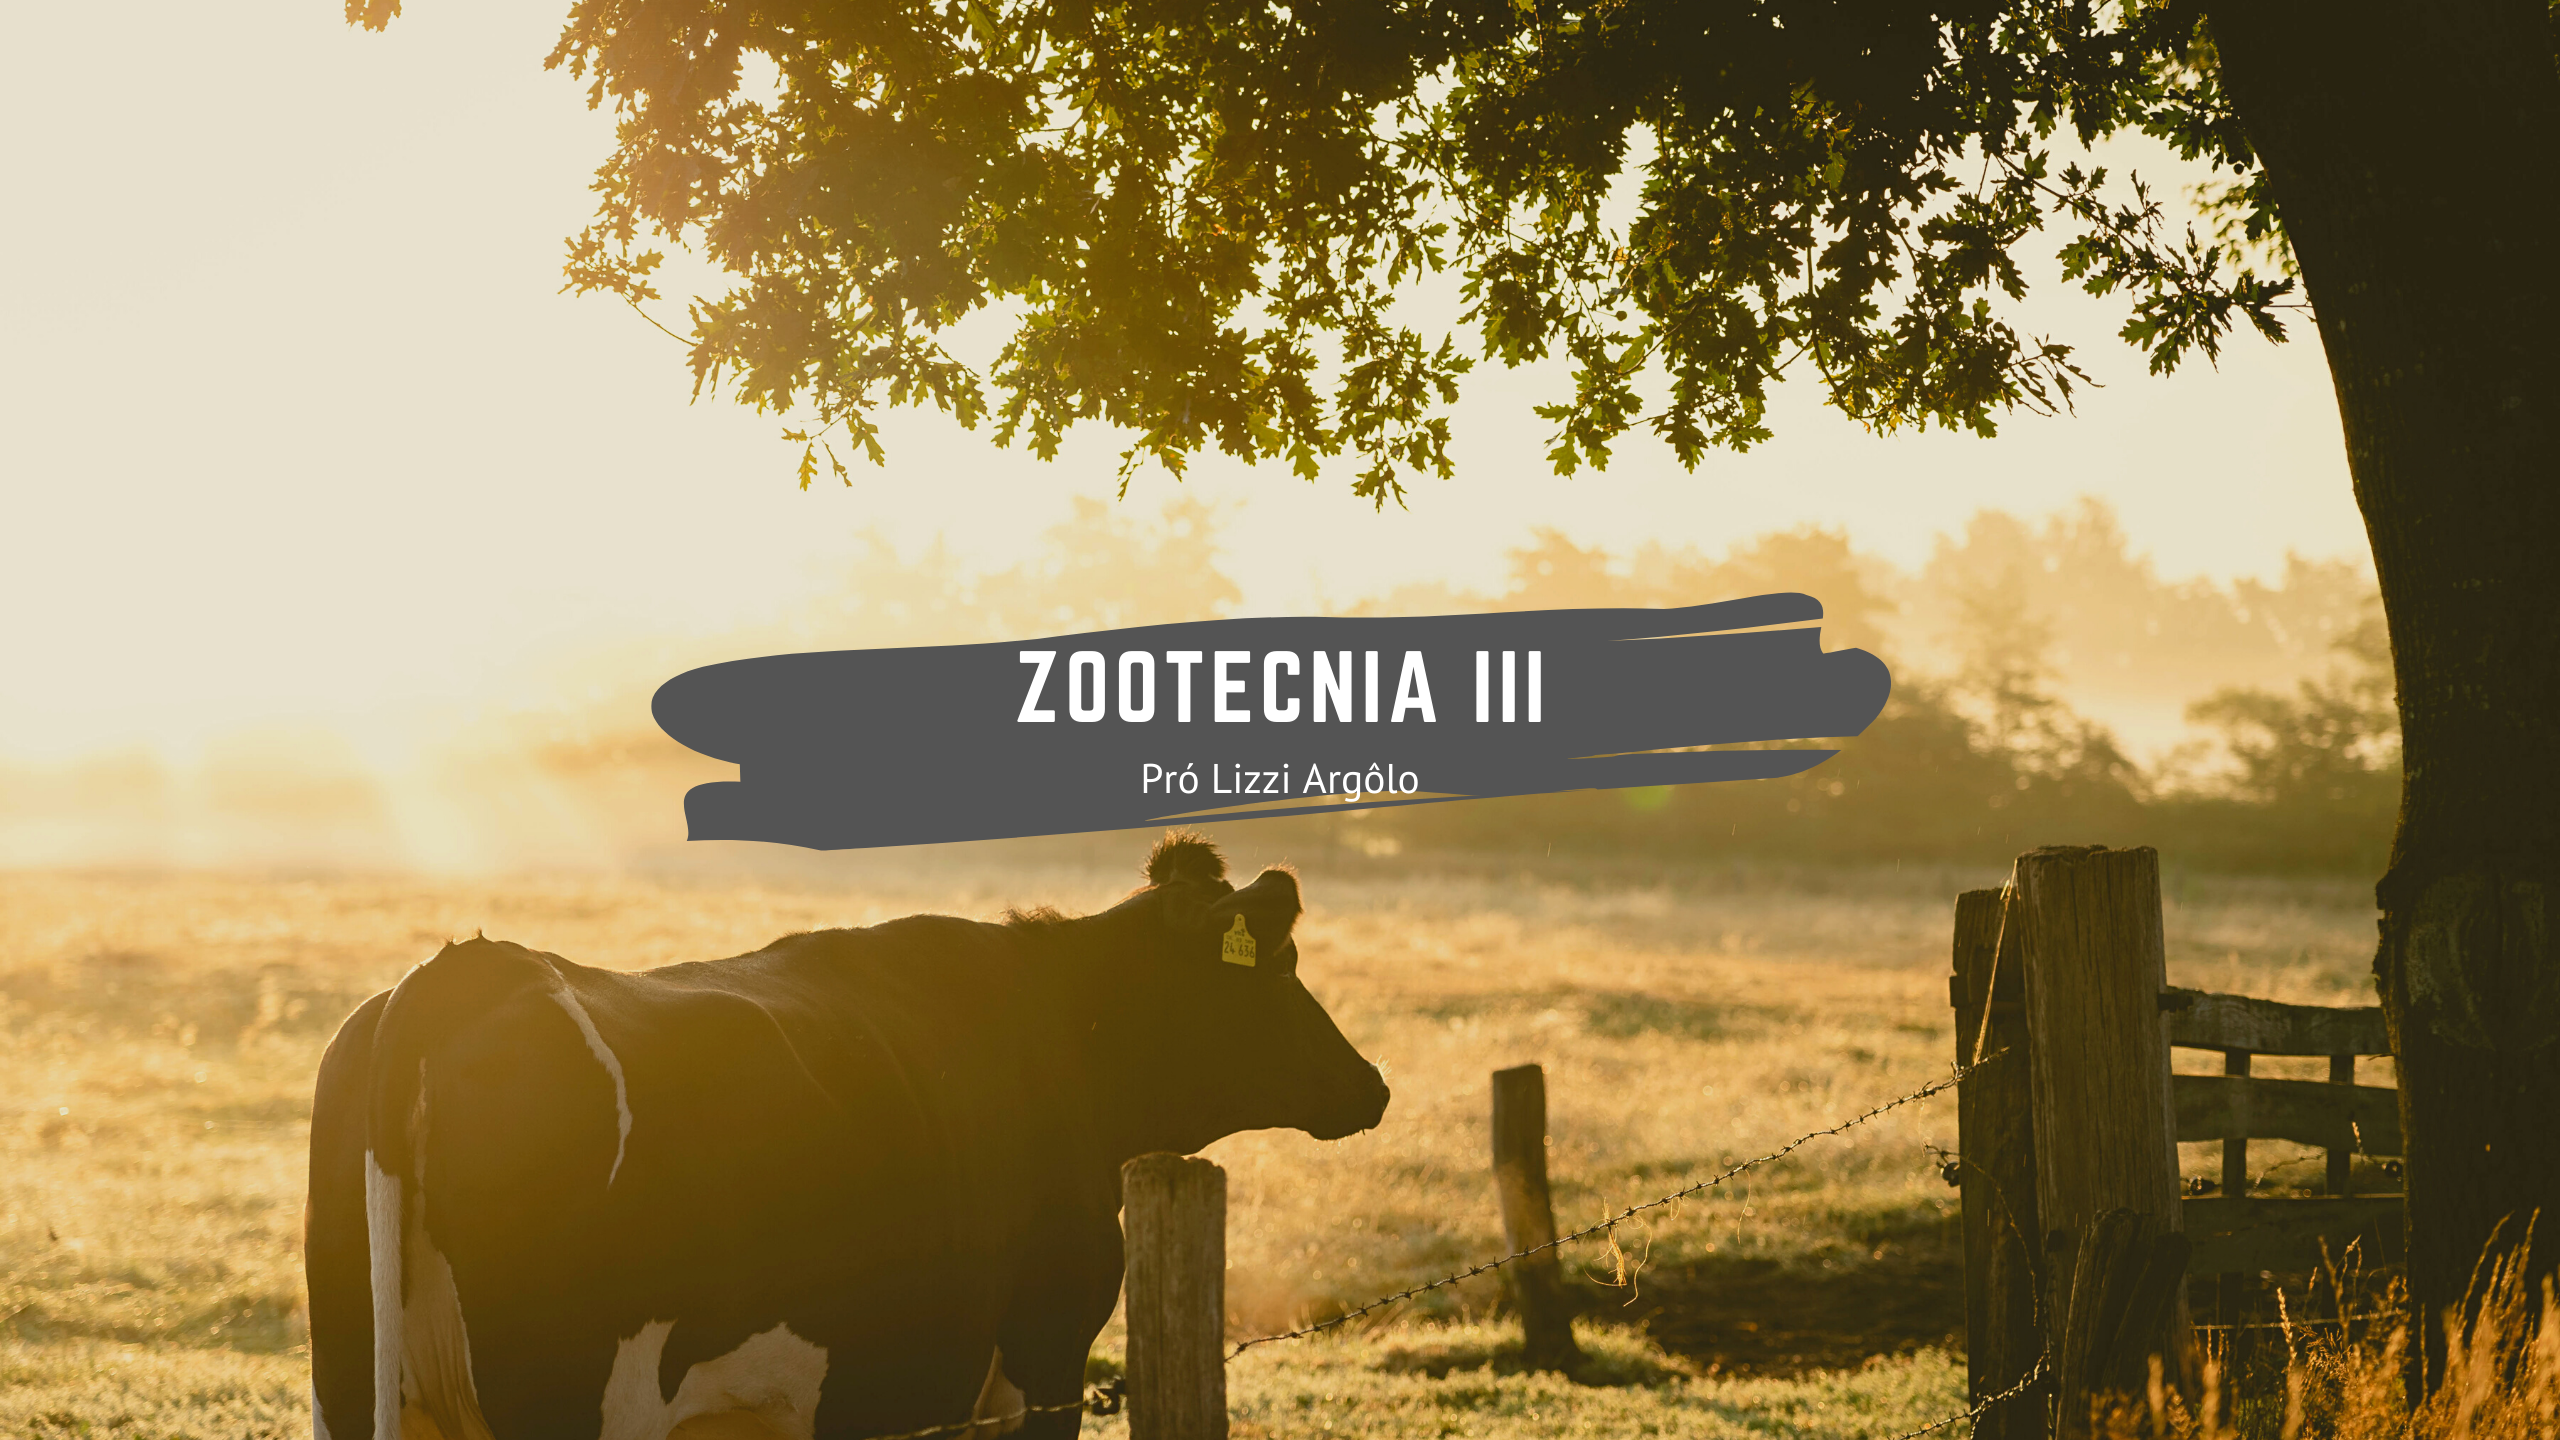 Zootecnia III